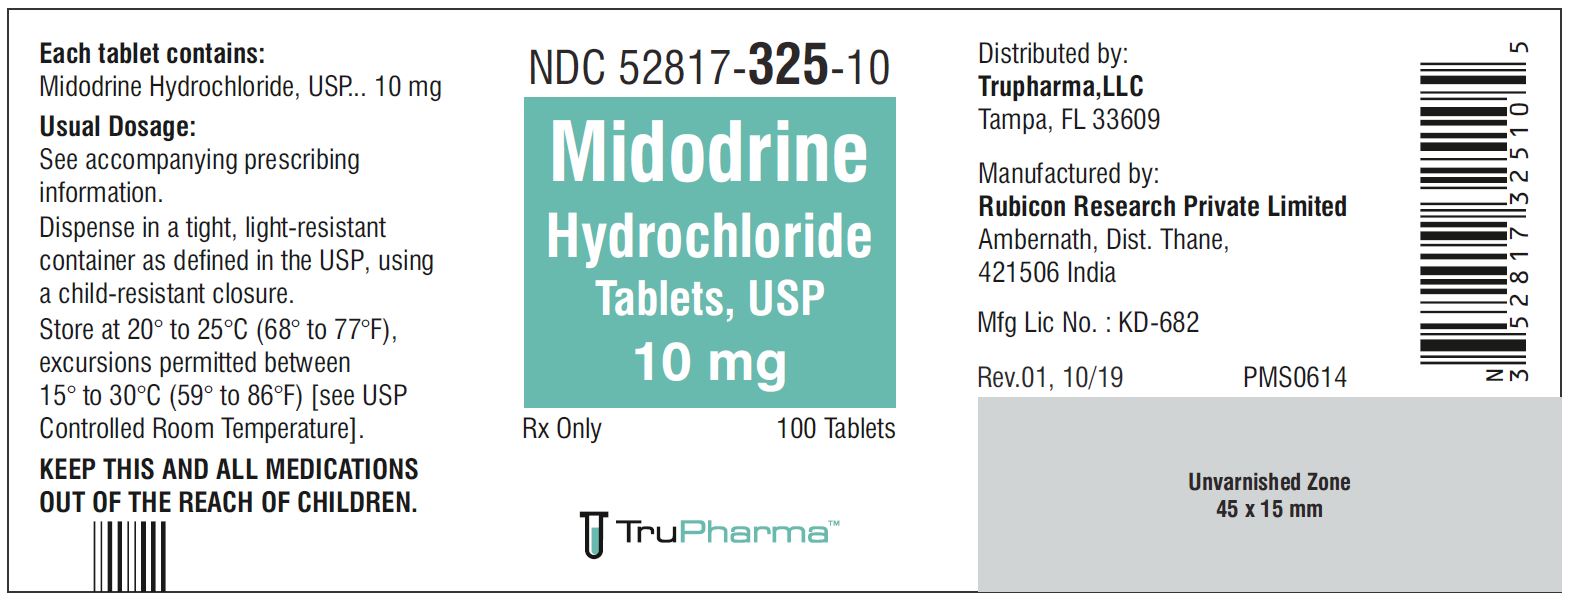 Midodrine Hydrochloride Tablets, USP 10mg - 100 Tablets - NDC 52817-325-10